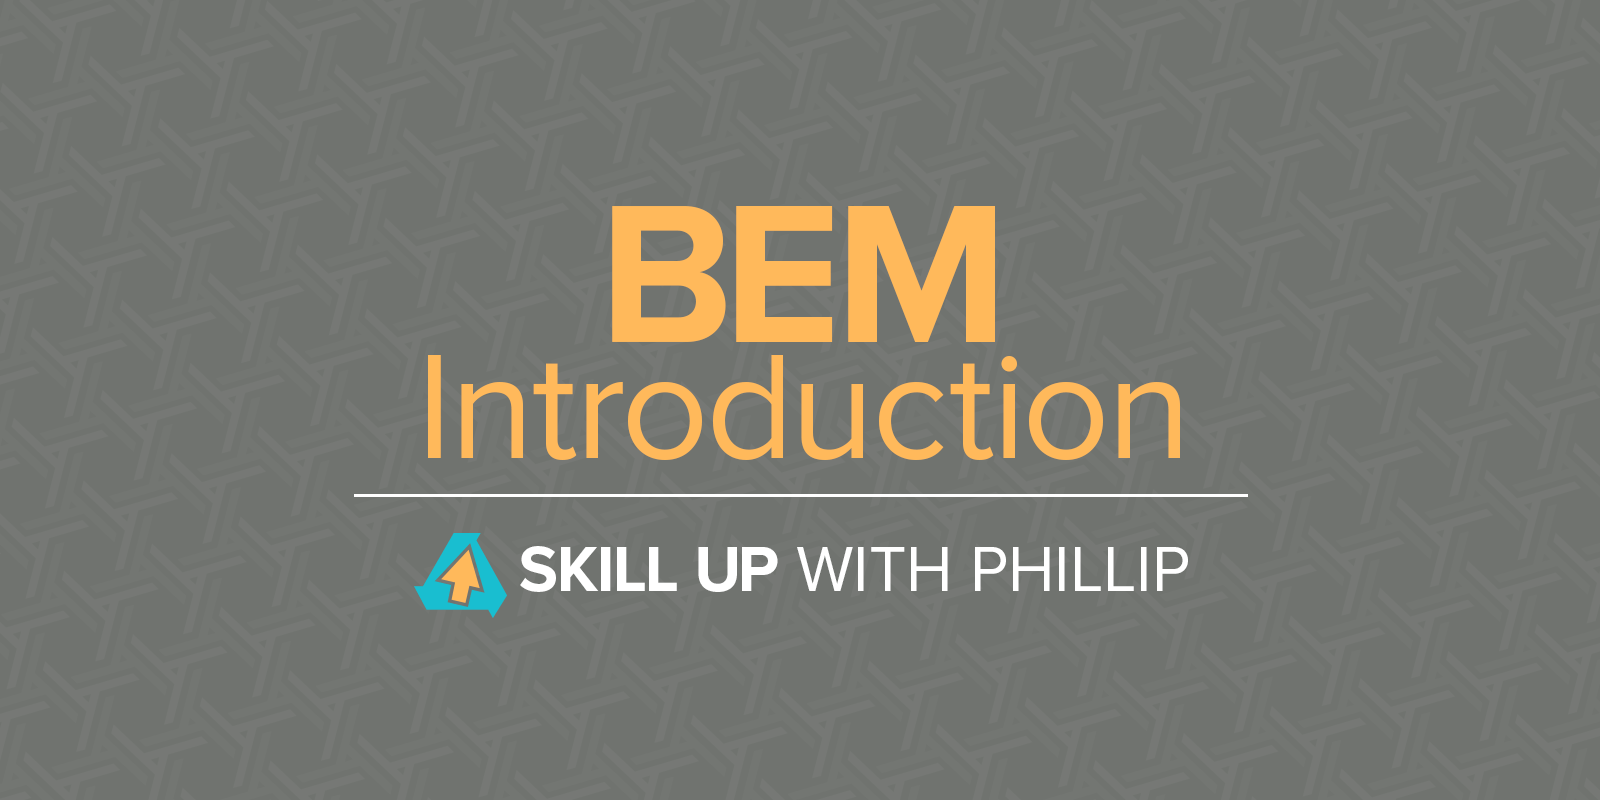 skill-up-phillip-bem-introduction